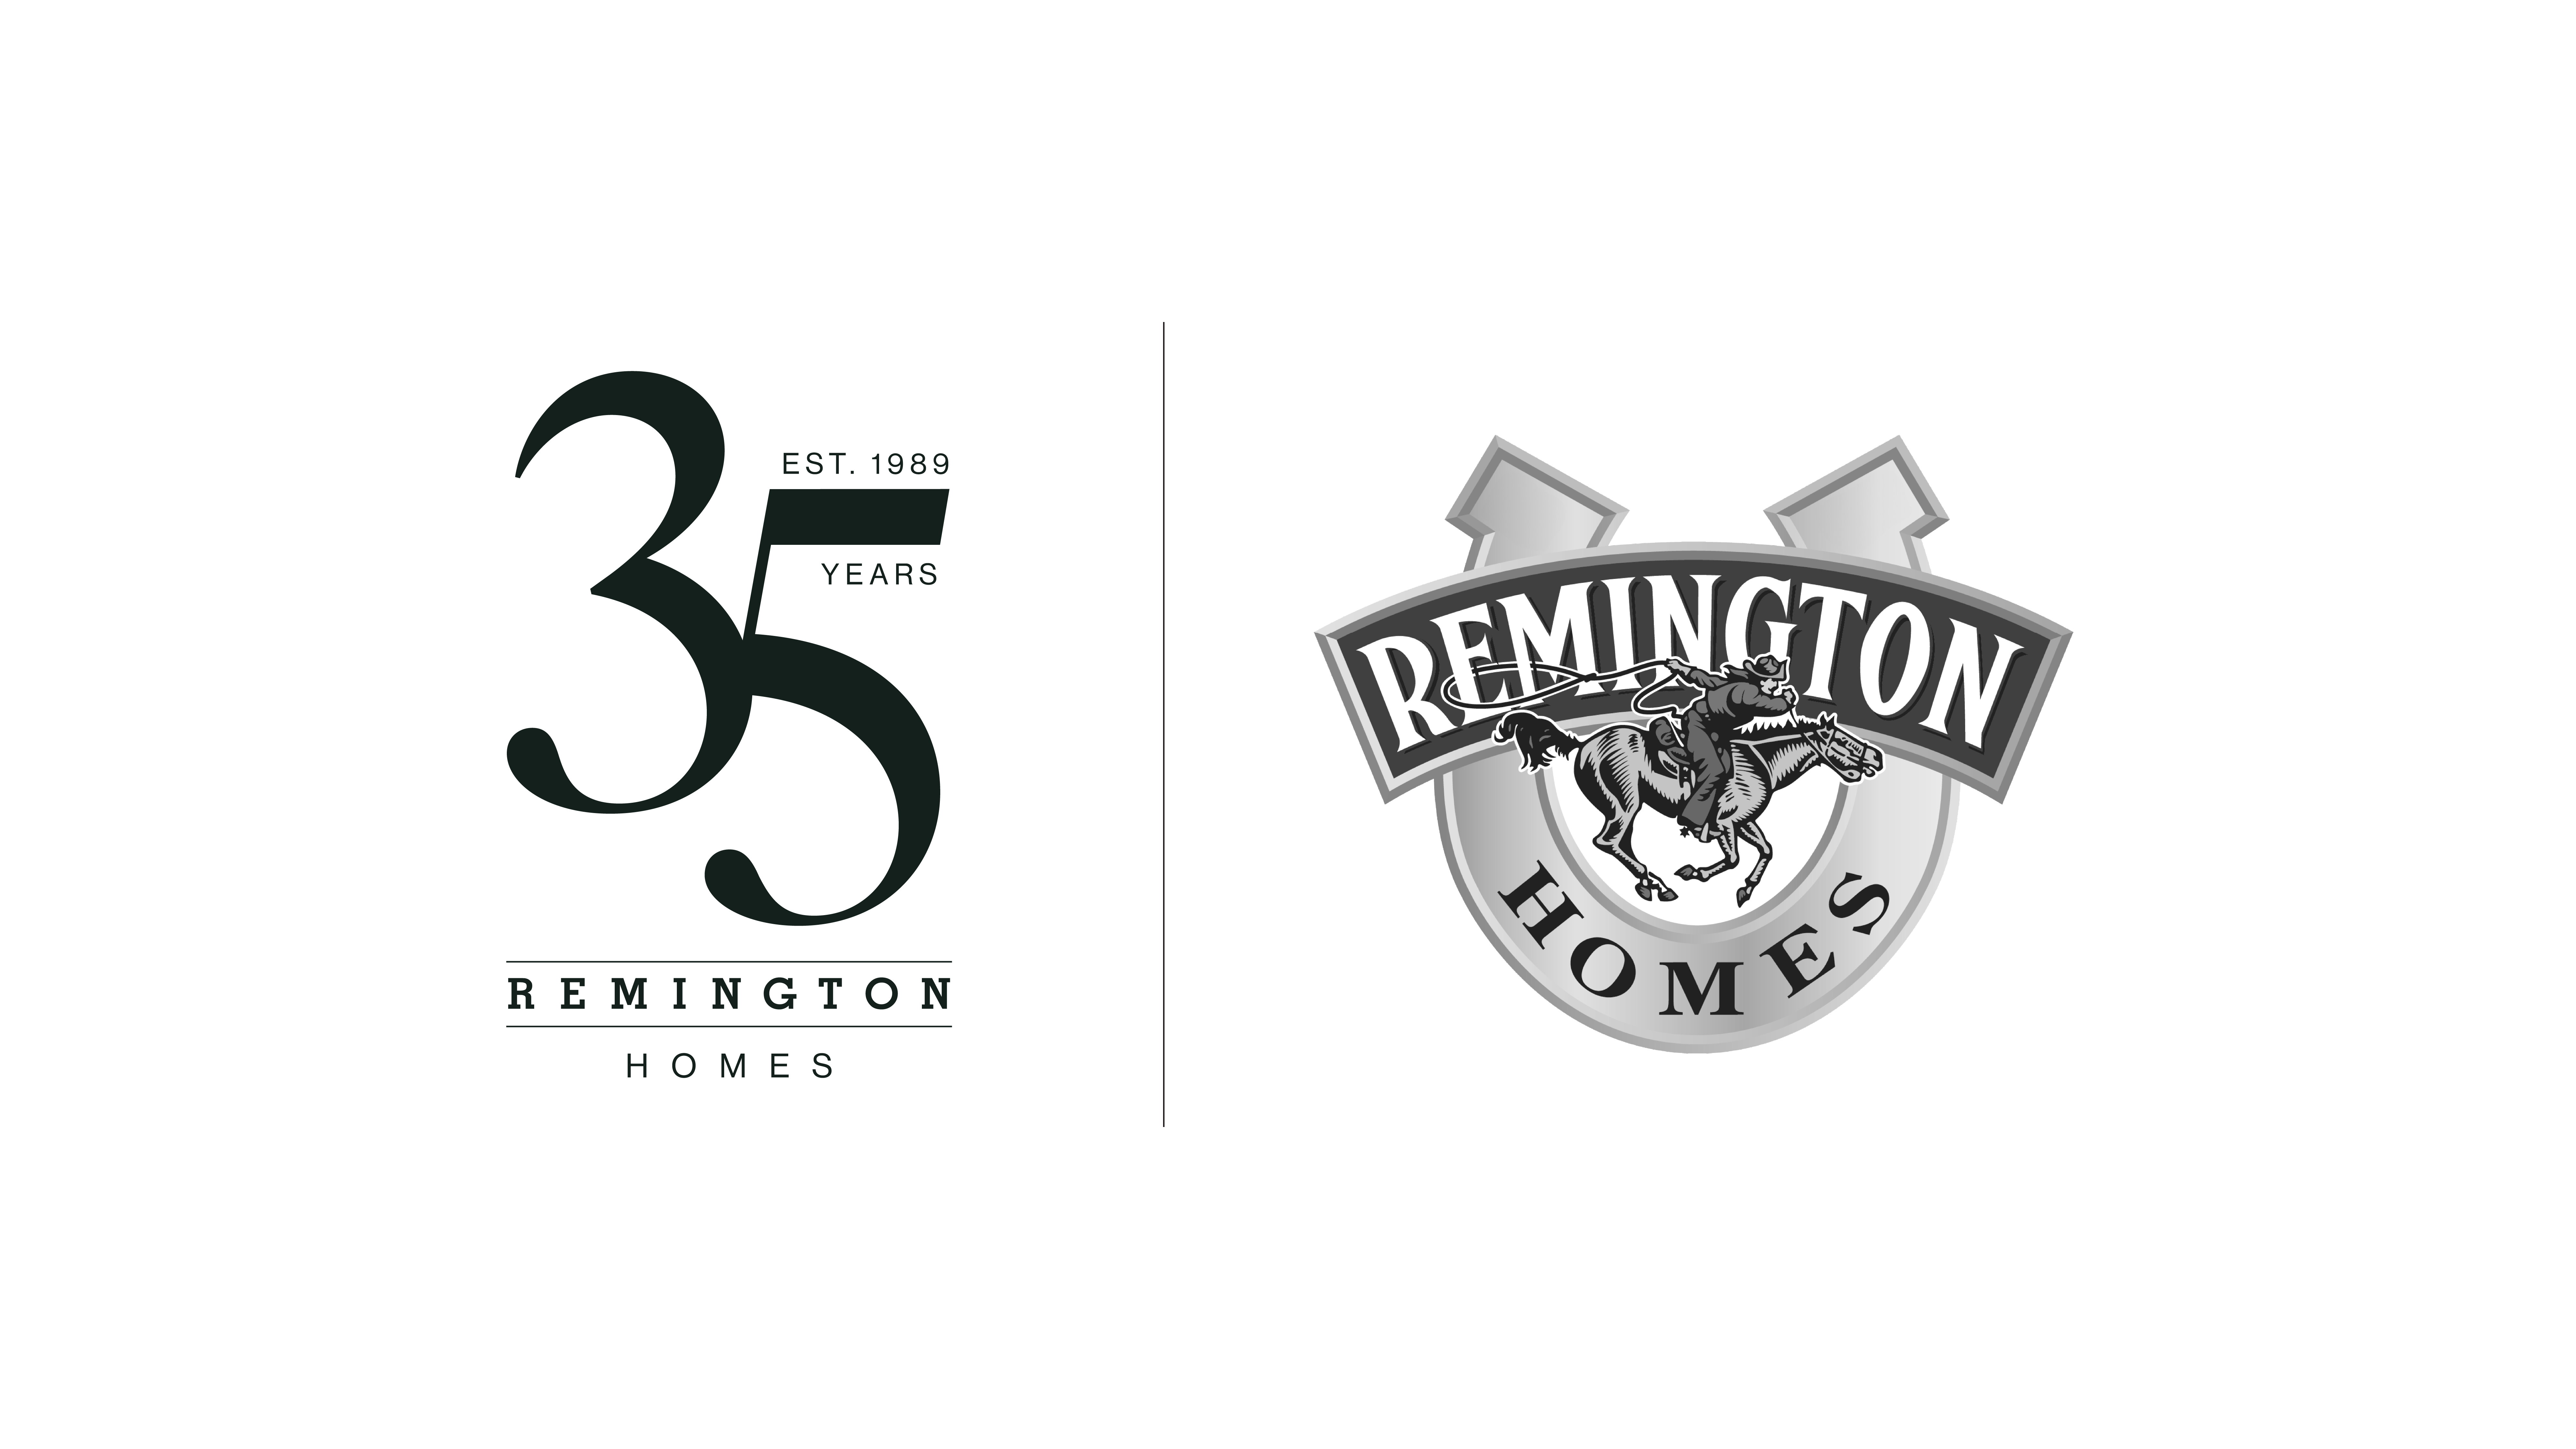 Remington Homes Celebrates 35 Years